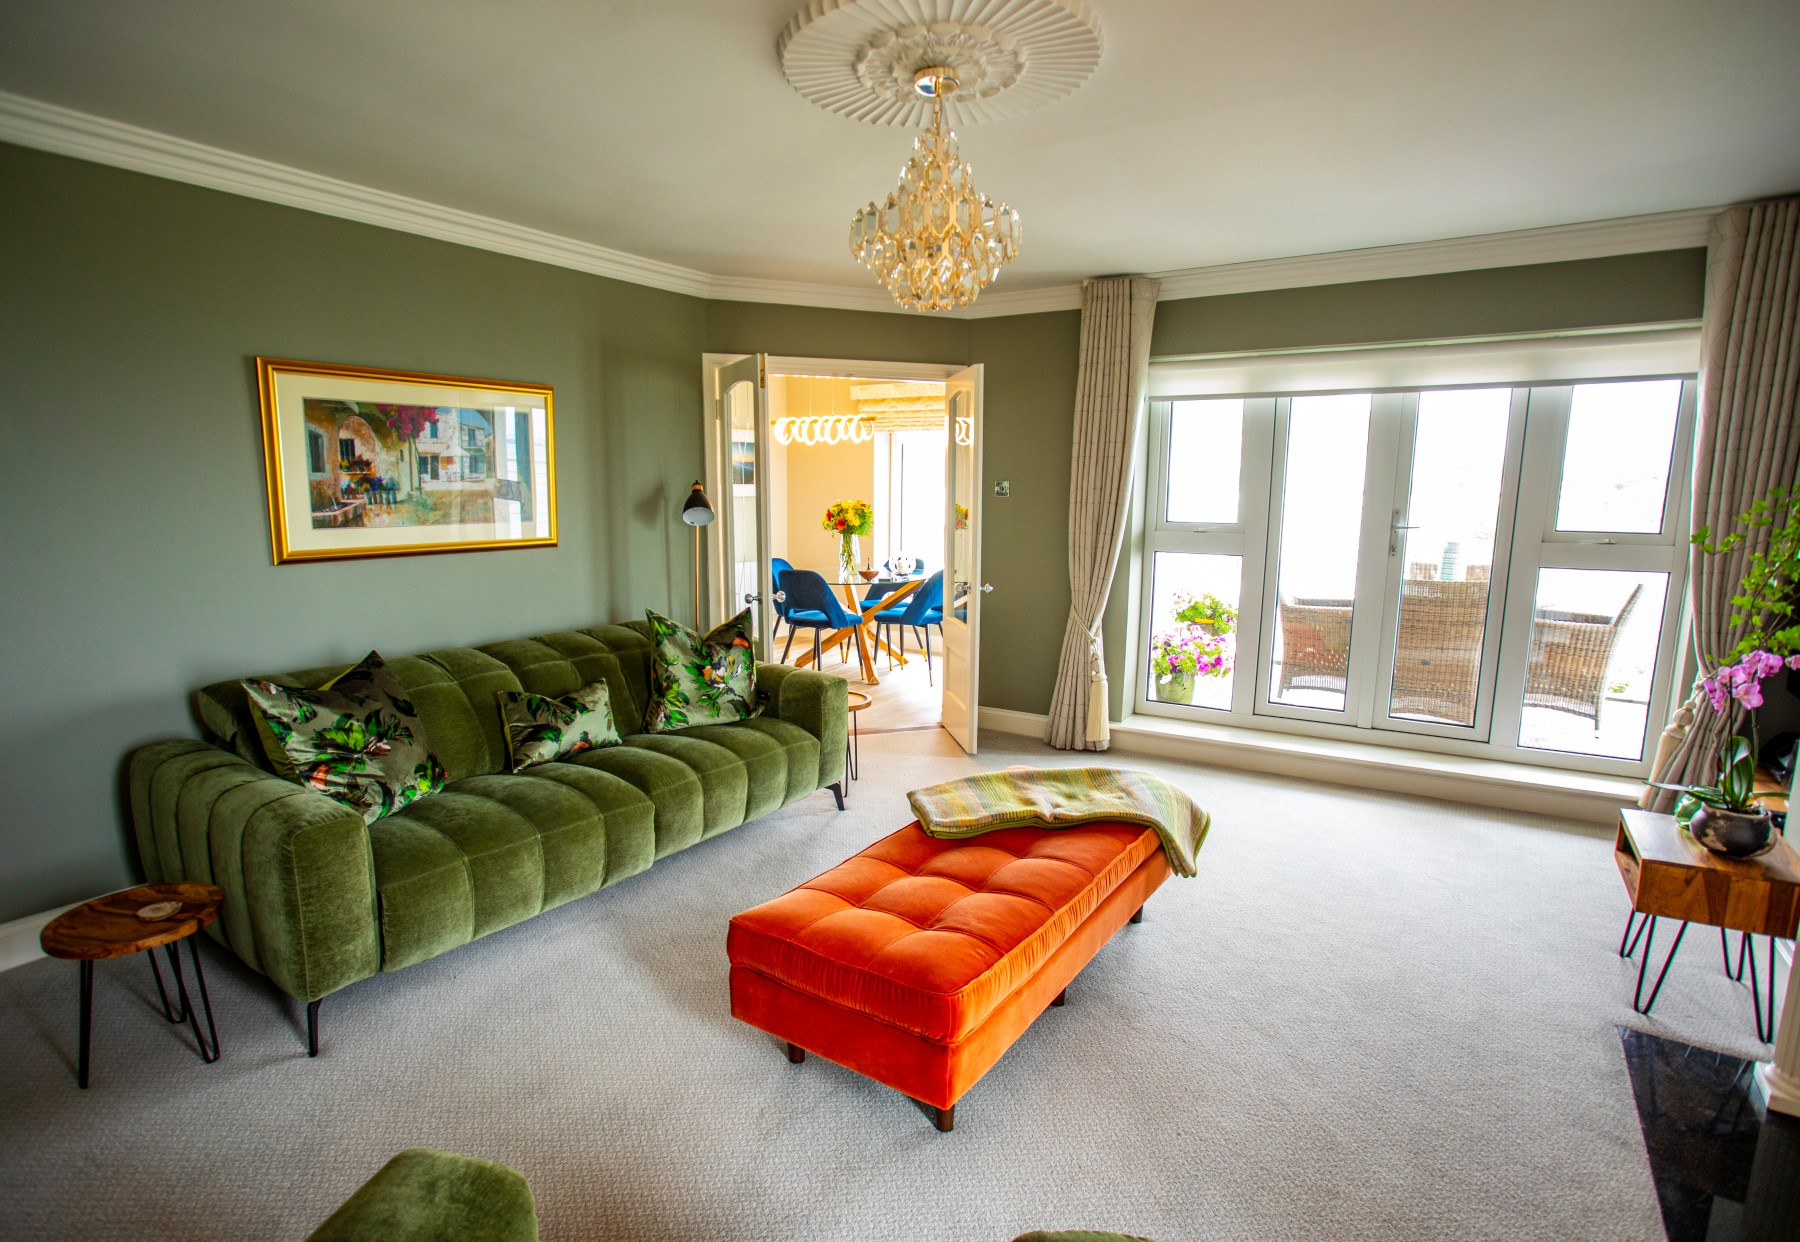 hamilton living room design south dublin Custom